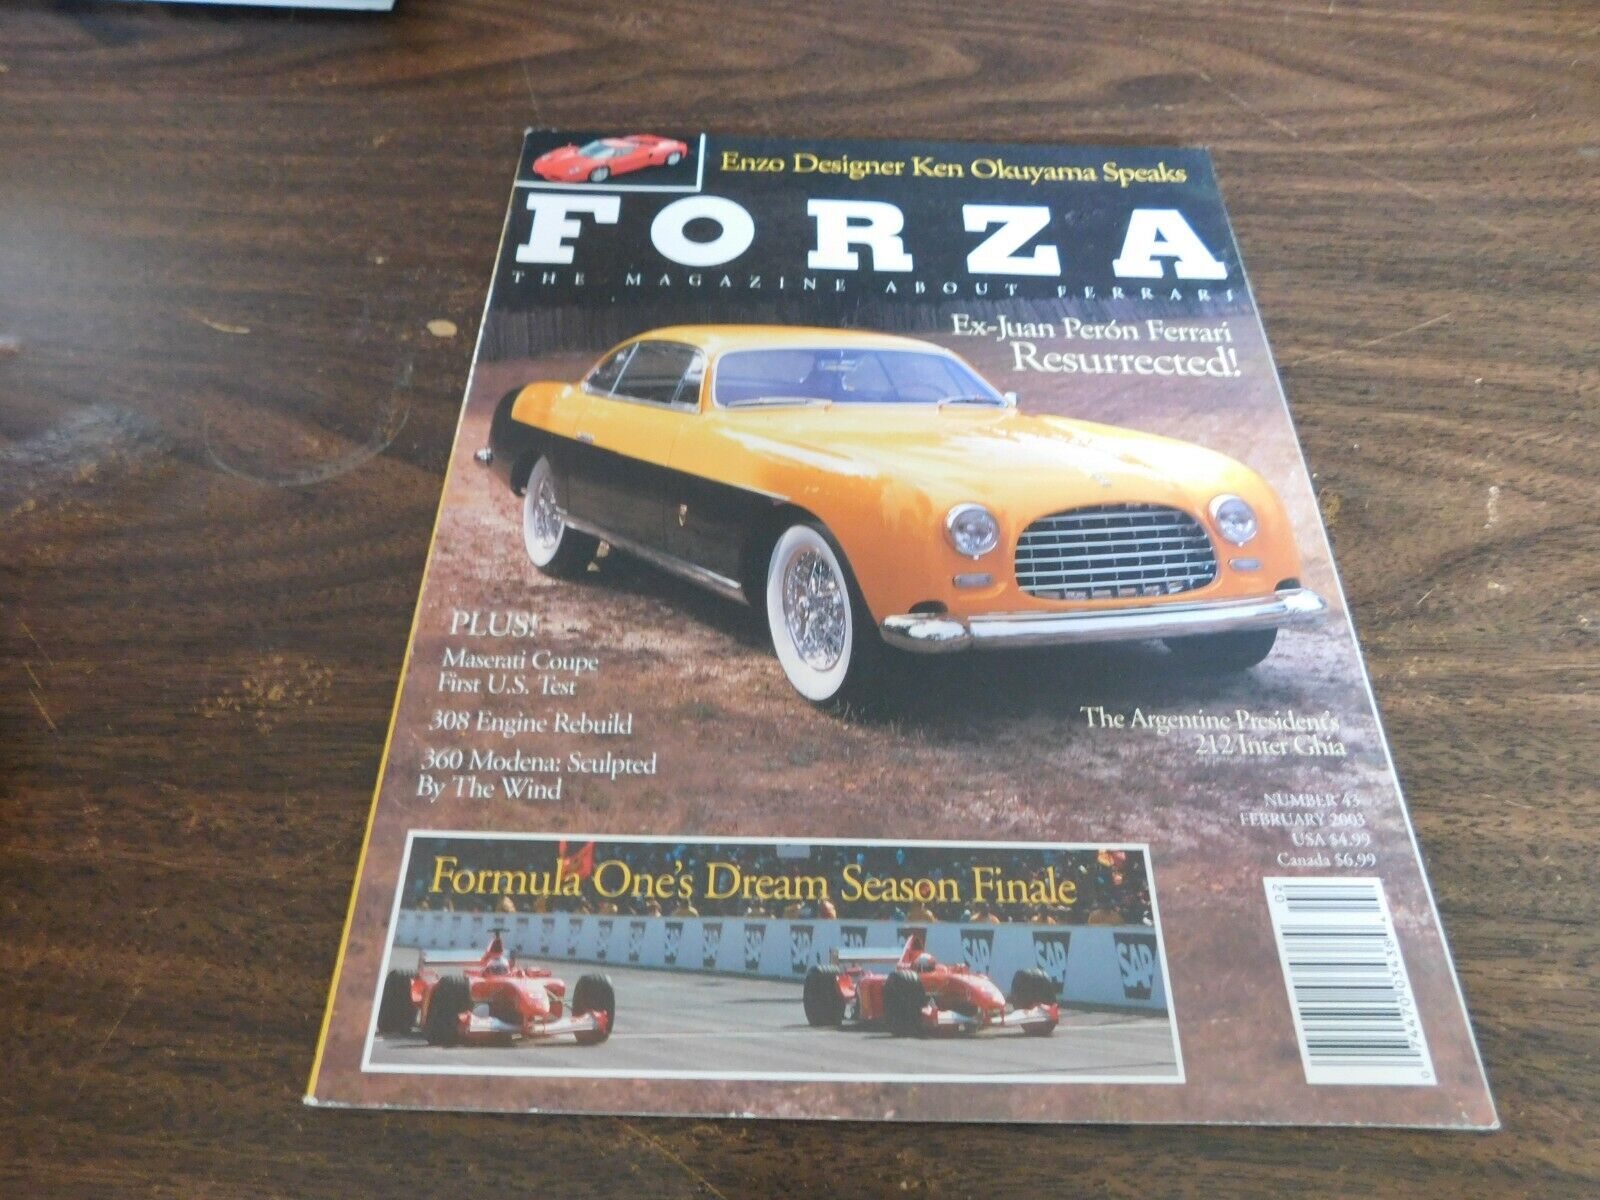 Forza The Magazine About Ferrari #43 February 2003 308, 212 Inter Ghia